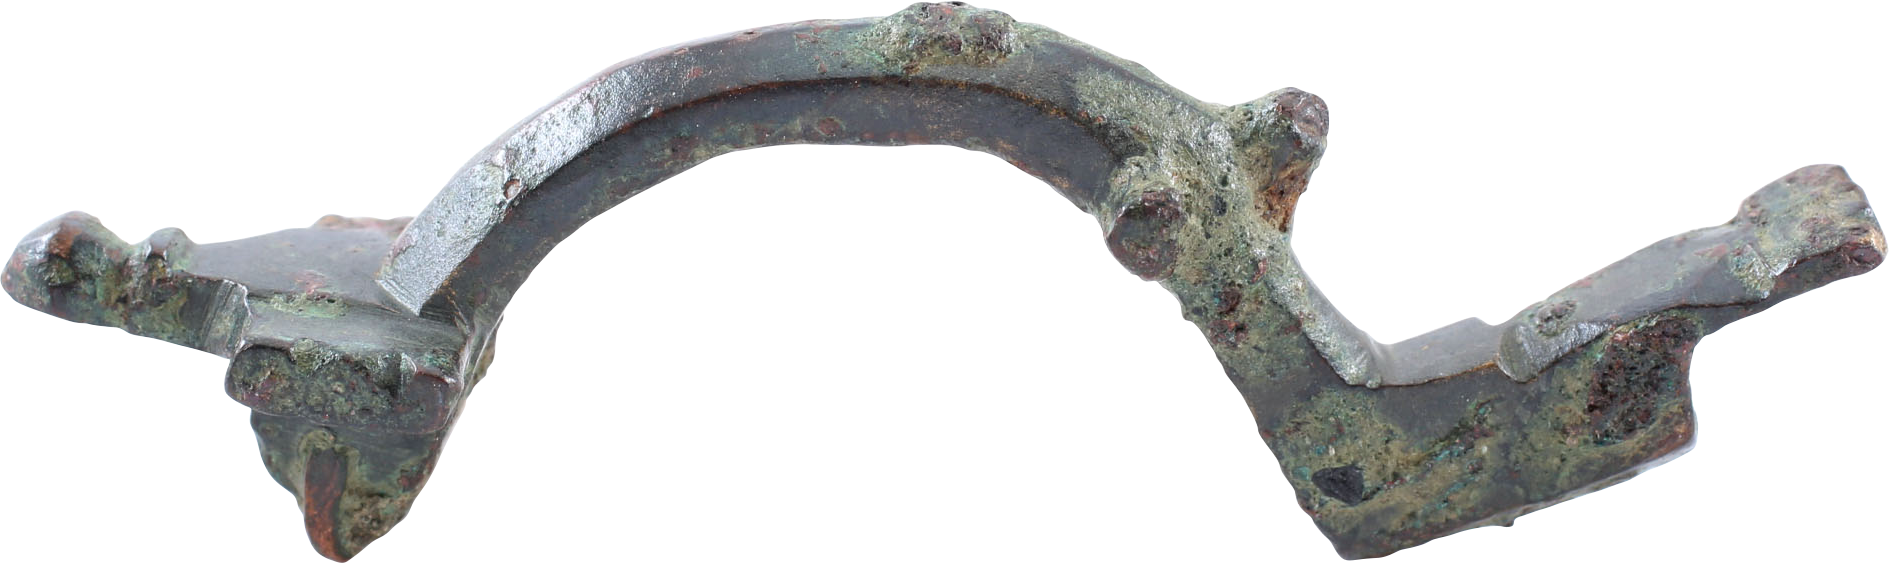 ANCIENT ROMAN BROOCH (GARMENT PIN) FIBULA 200-400 AD